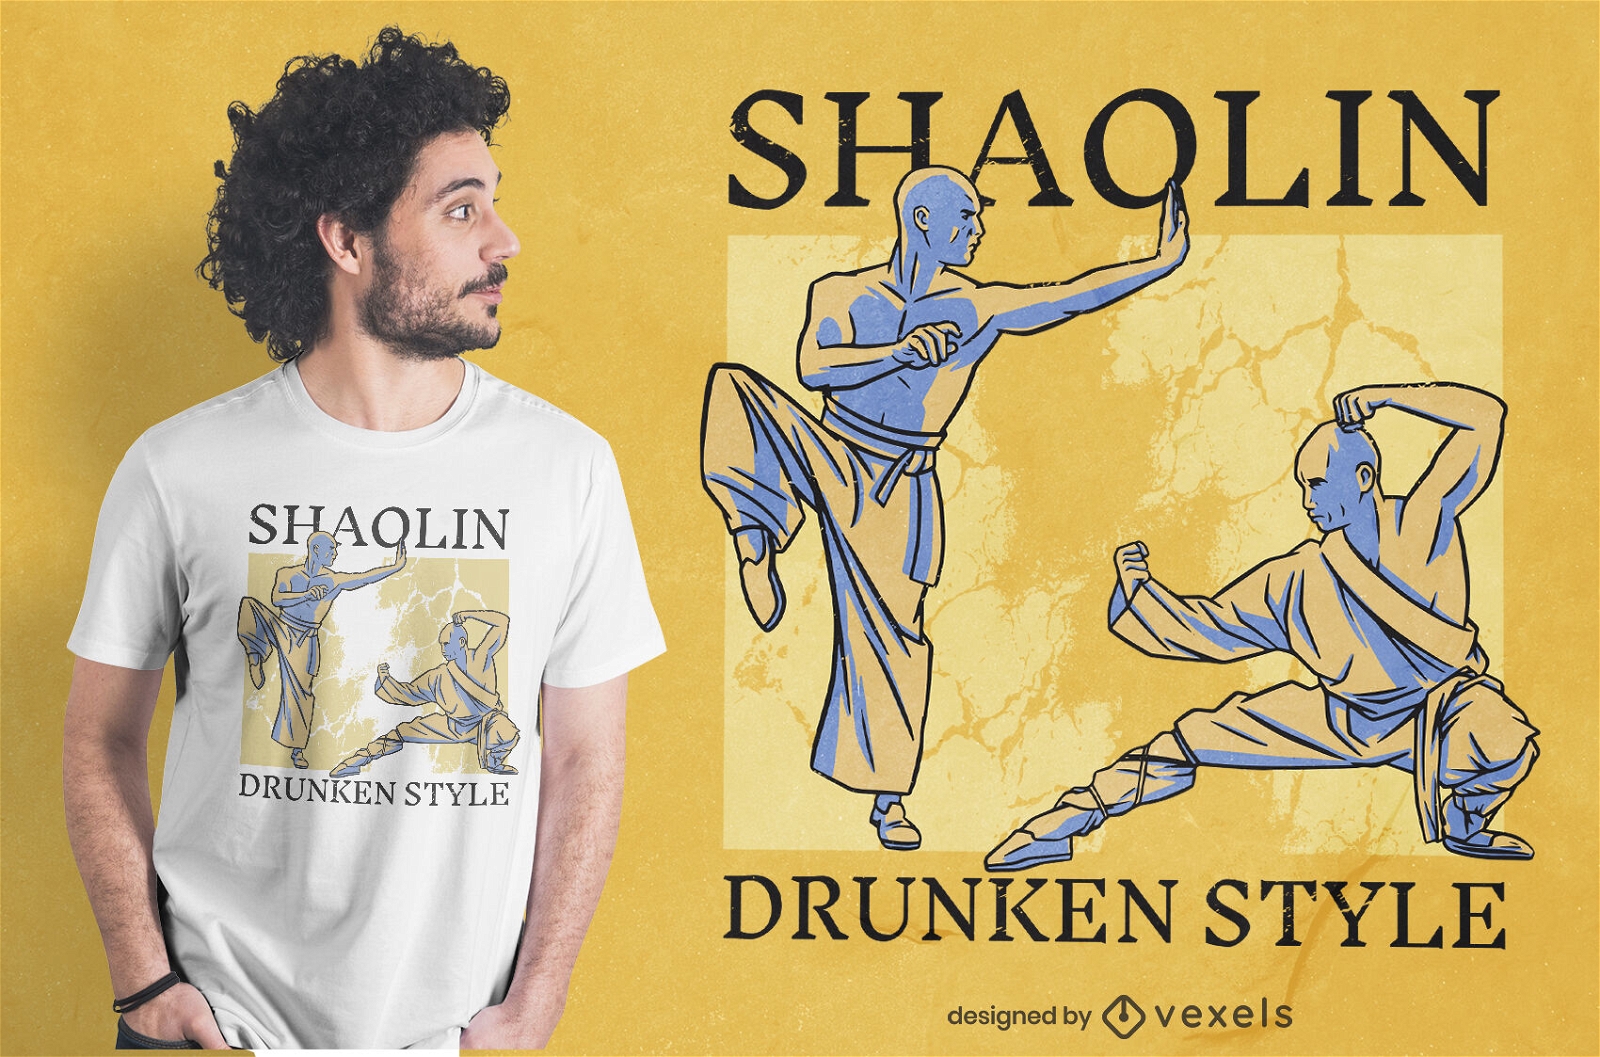 Shaolin-T-Shirt im betrunkenen Stil